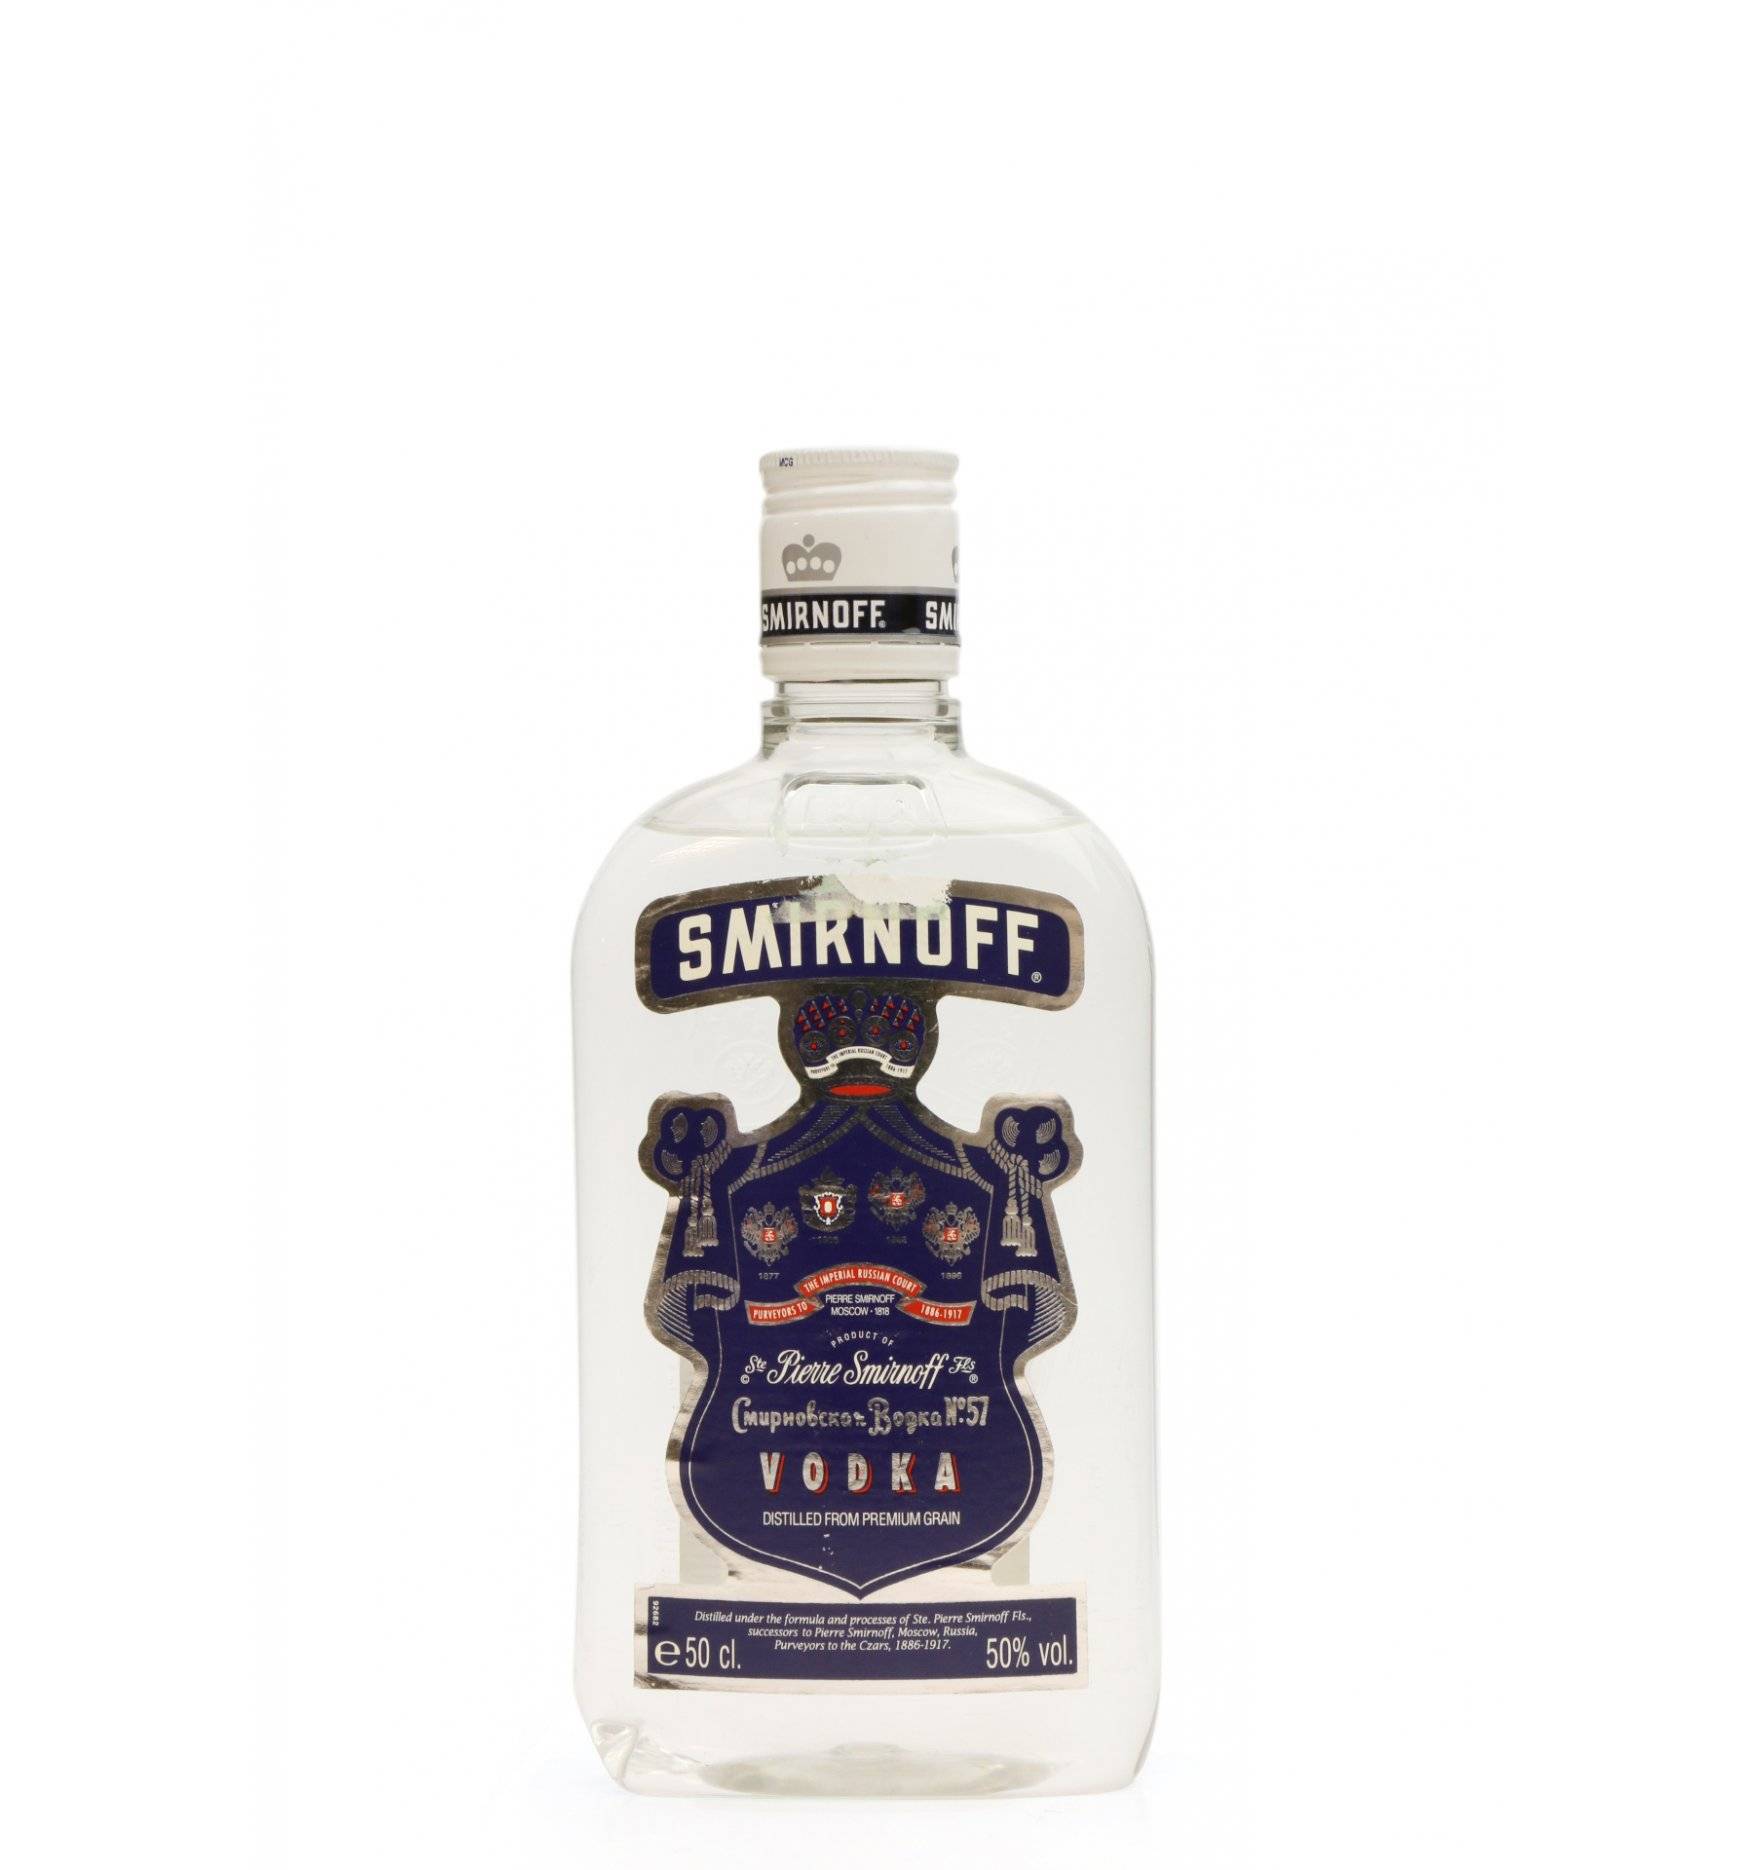 Smirnoff No. 57 Vodka (50cl) - Just Whisky Auctions